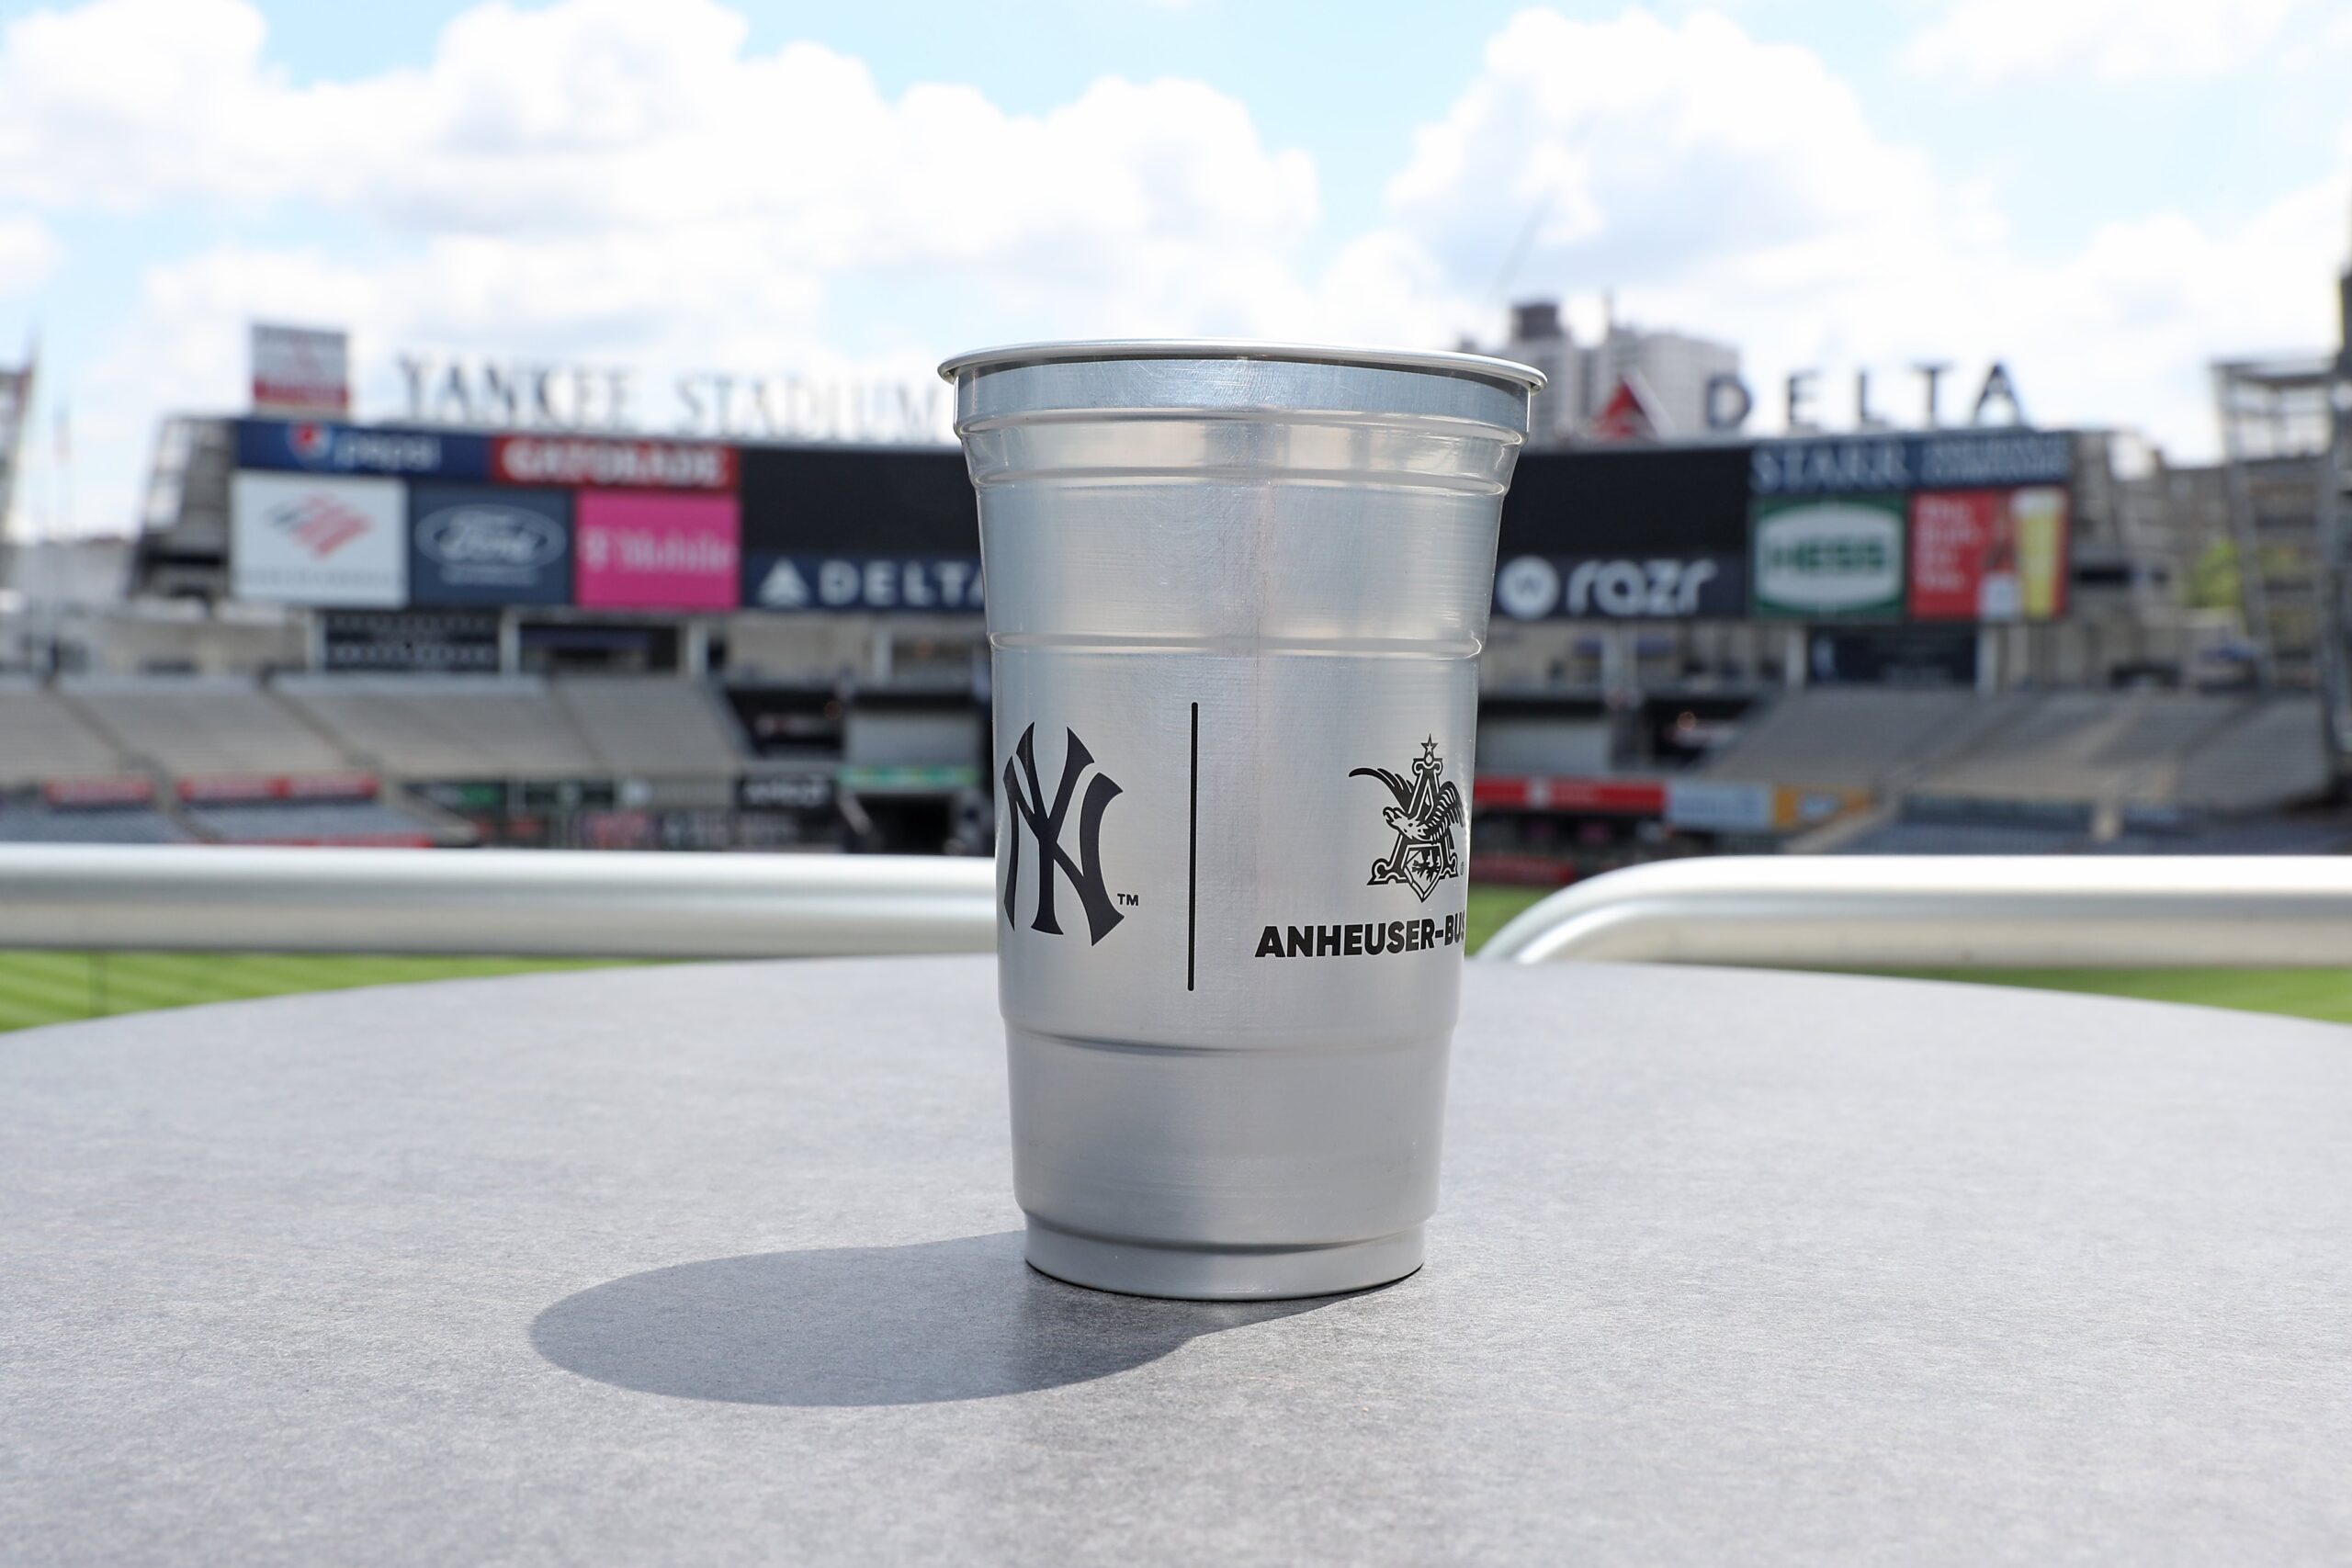 Ball aluminium cups at Yankee Stadium - The Metal Packager